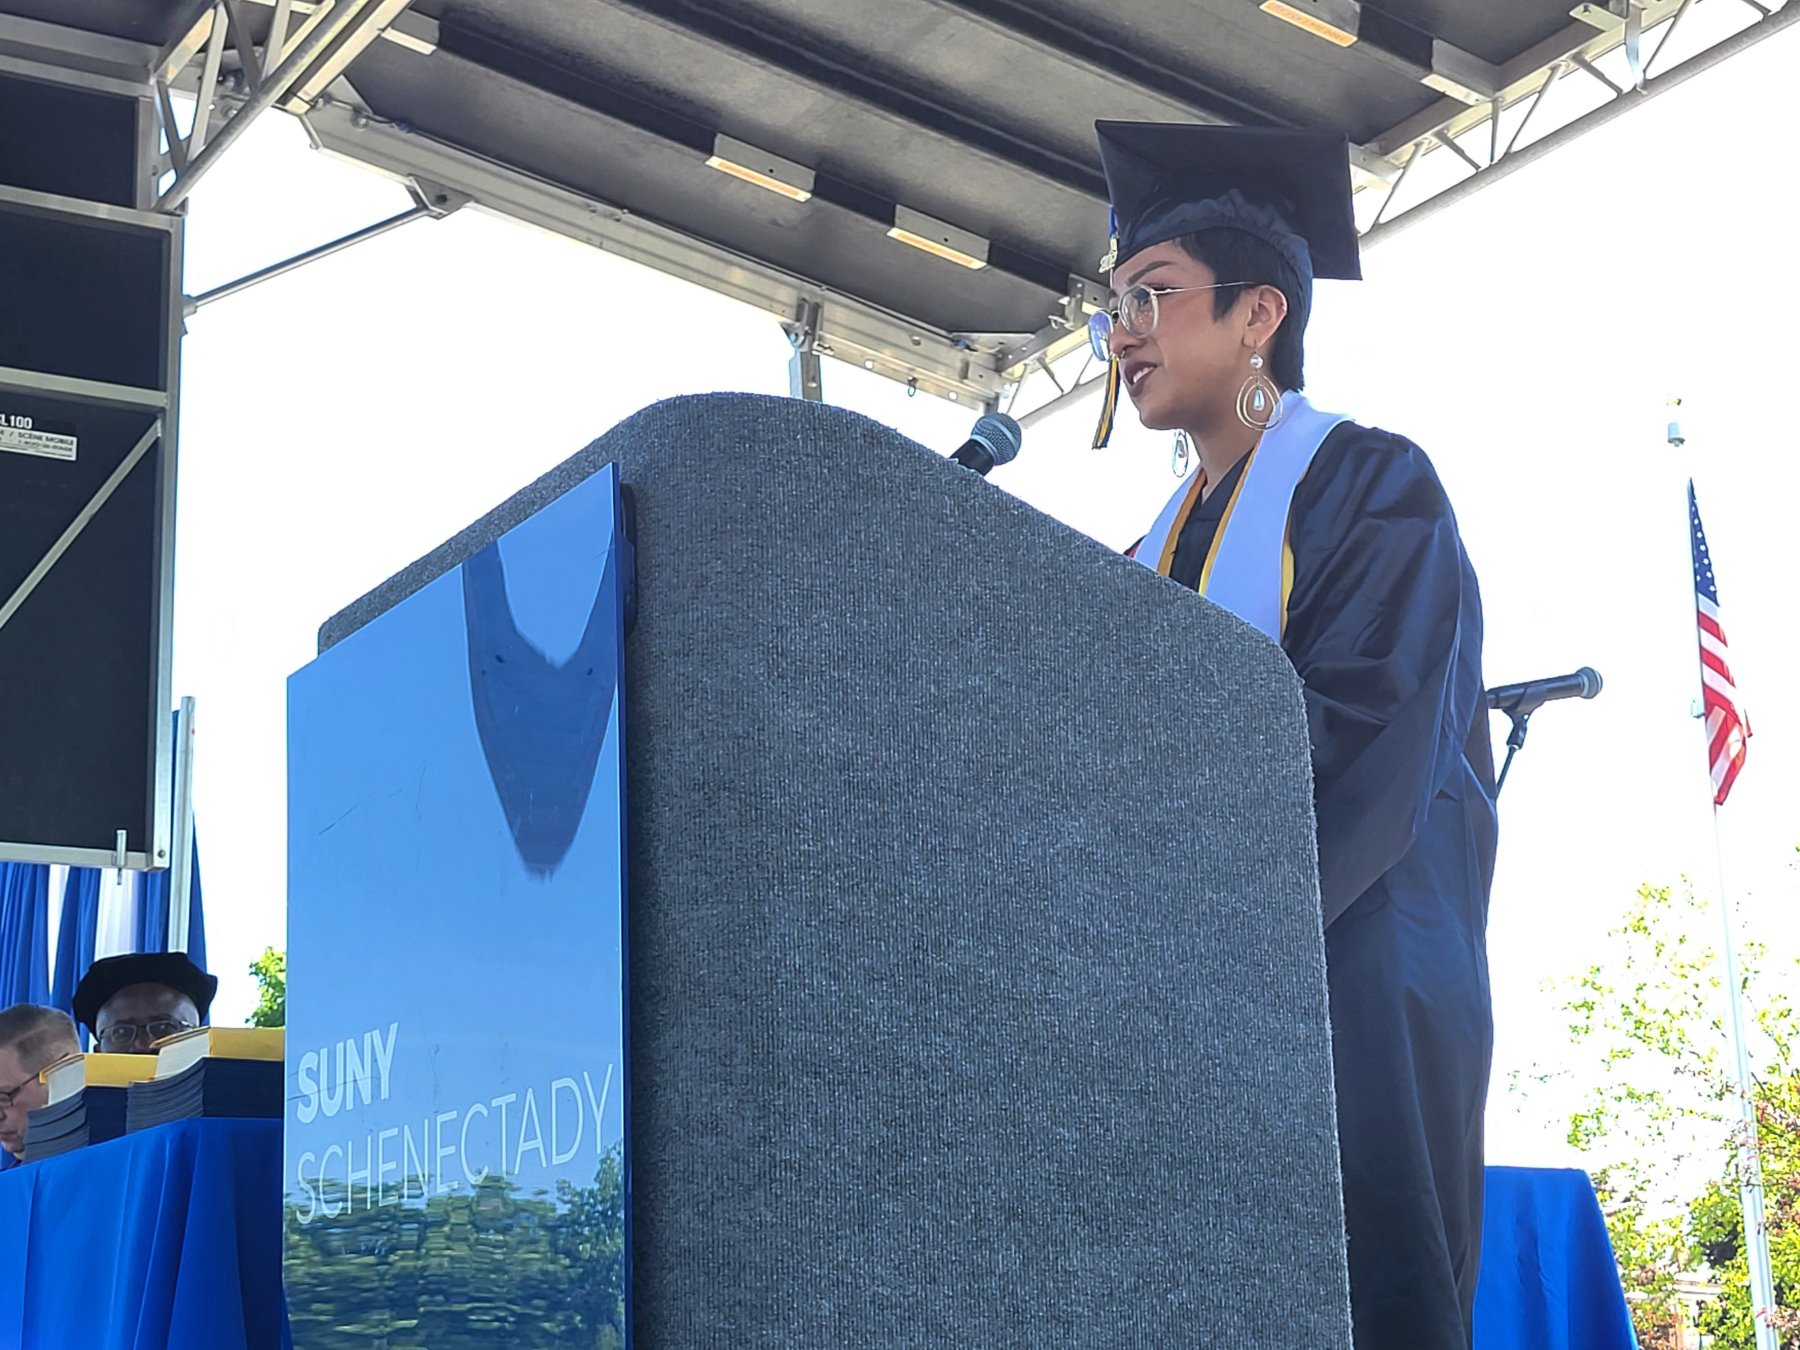 Jennifer Diaz speaking at podium on stage